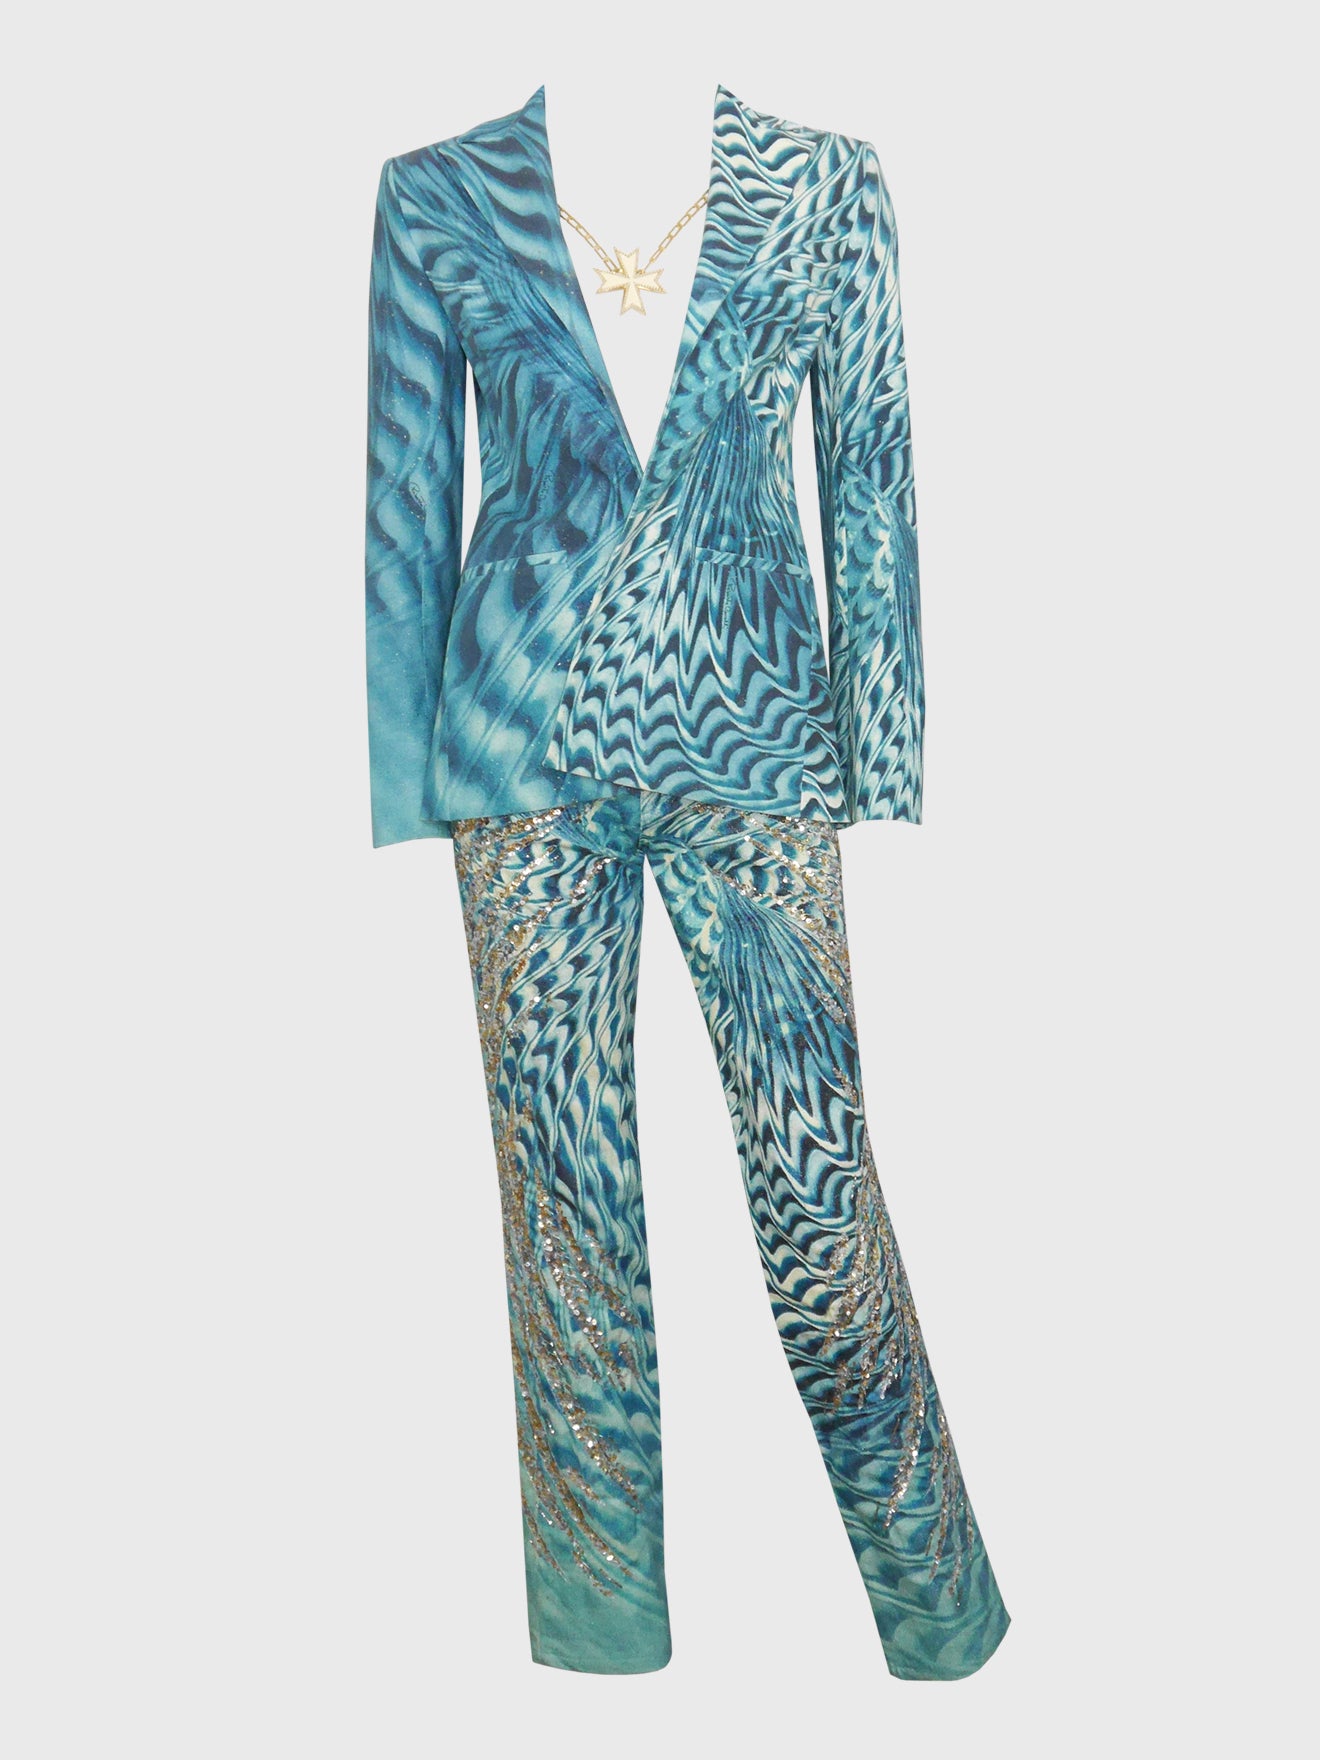 ROBERTO CAVALLI Spring 2001 Sequined Denim Pants & Jacket Suit w/ Necklace